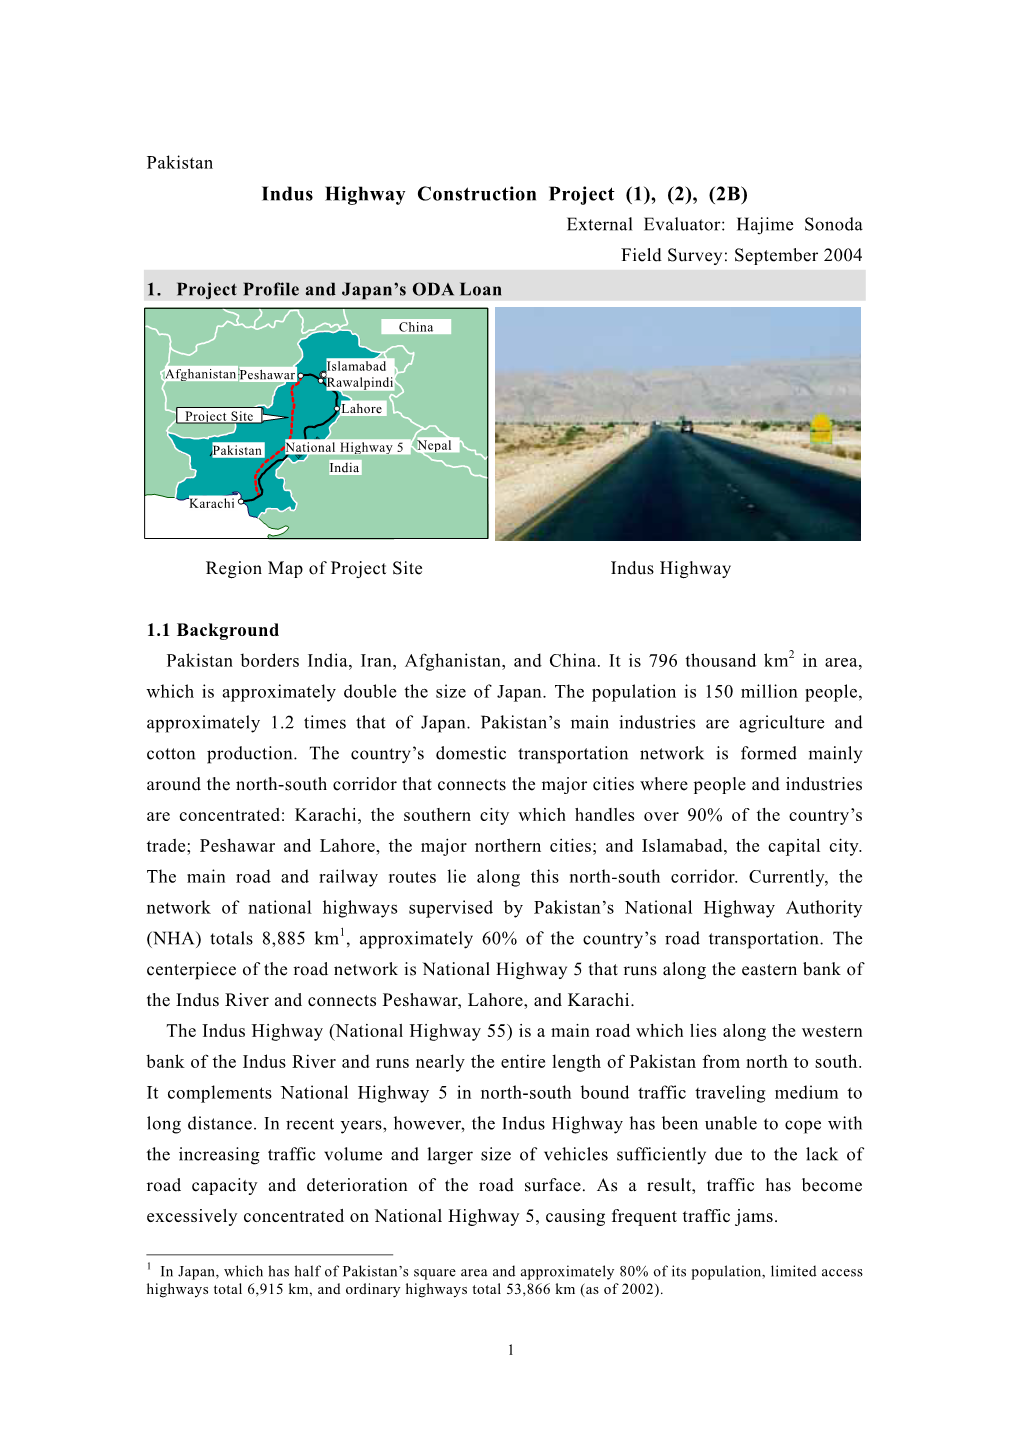 Indus Highway Construction Project (1), (2), (2B) External Evaluator: Hajime Sonoda Field Survey: September 2004 1．Project Profile and Japan’S ODA Loan